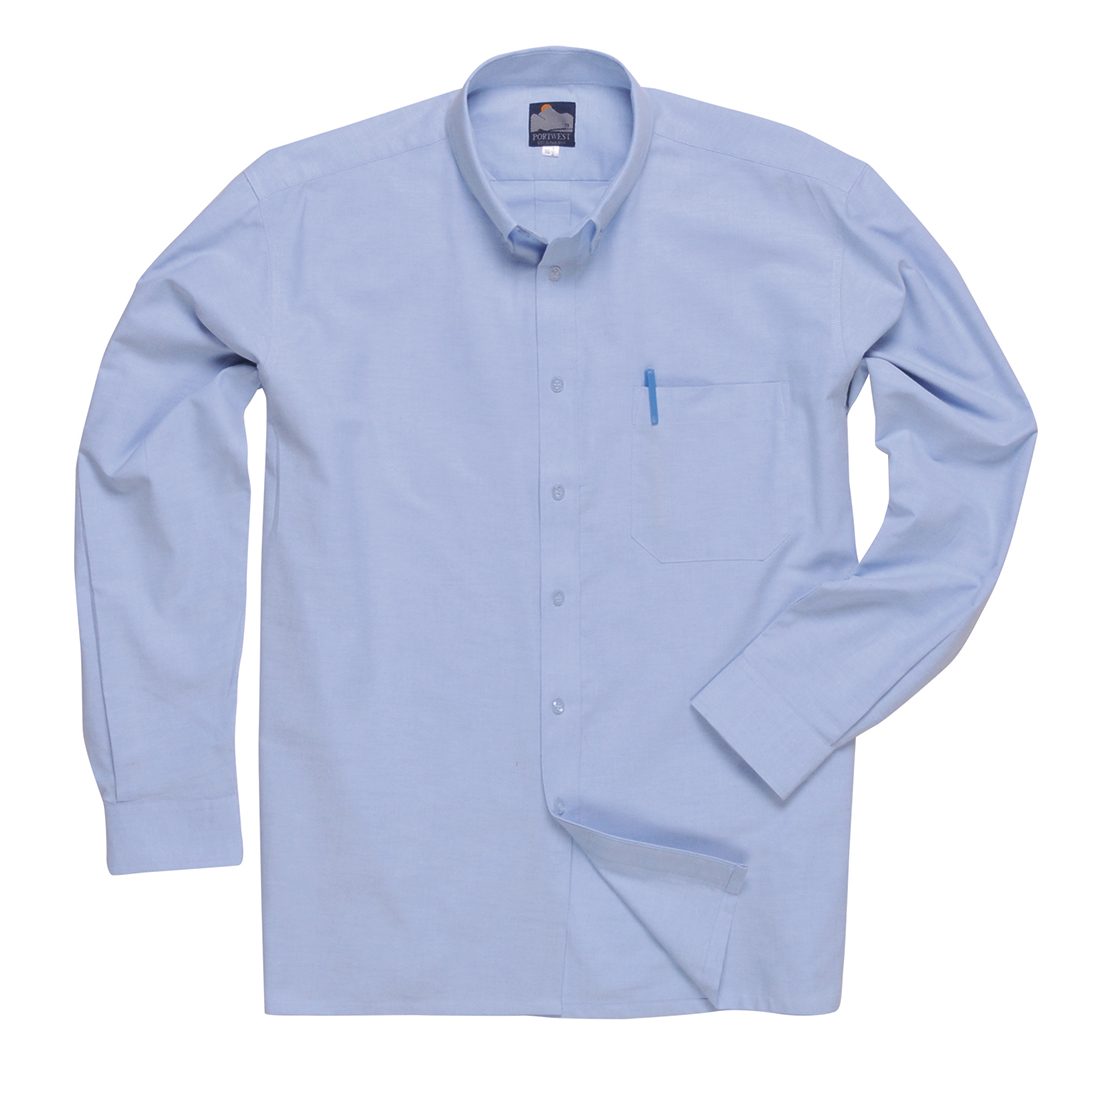 Portwest Oxford Shirt Long Sleeves